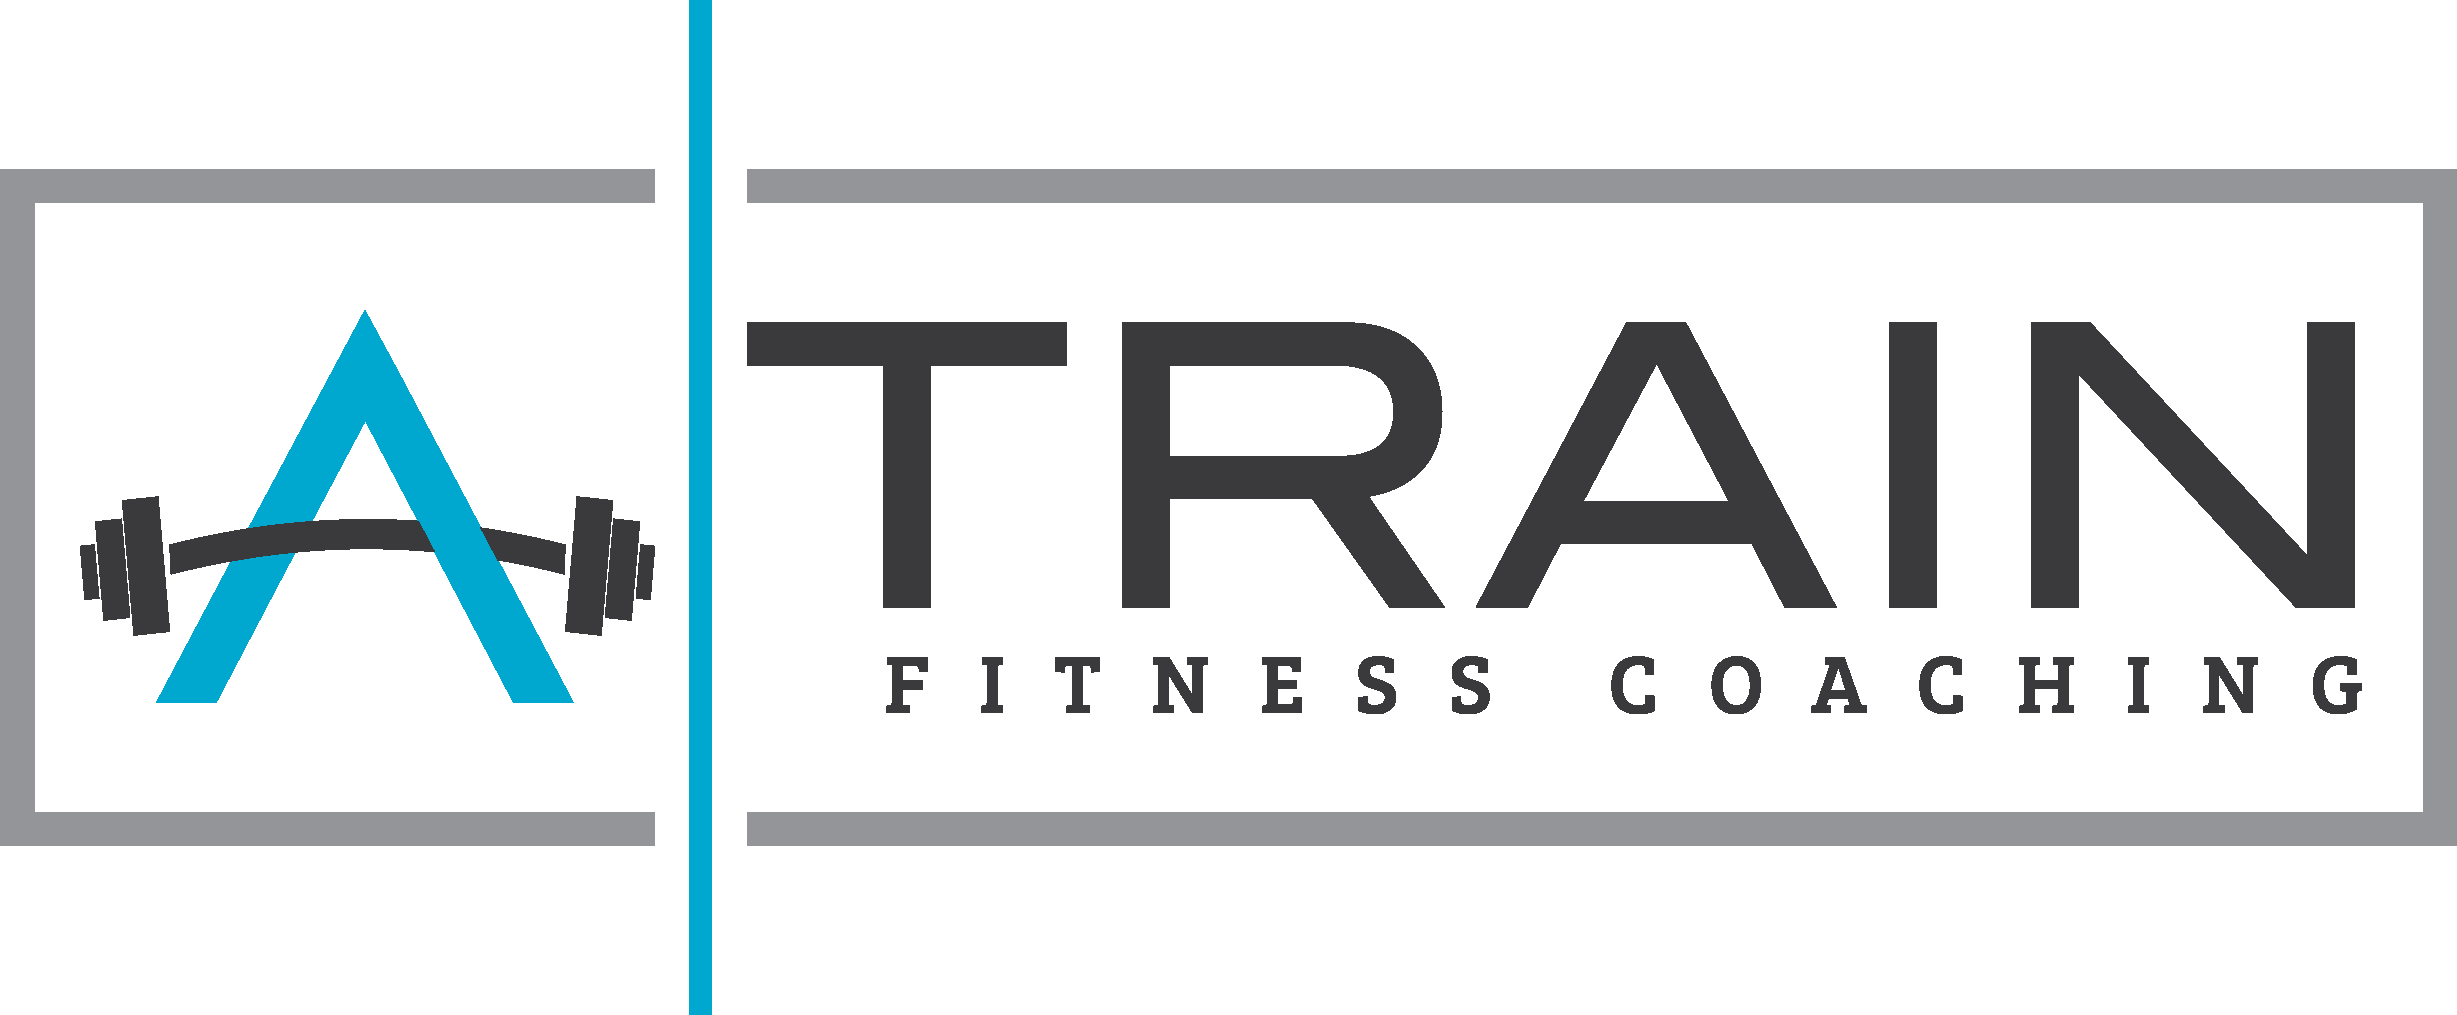 A|Train Fitness coaching